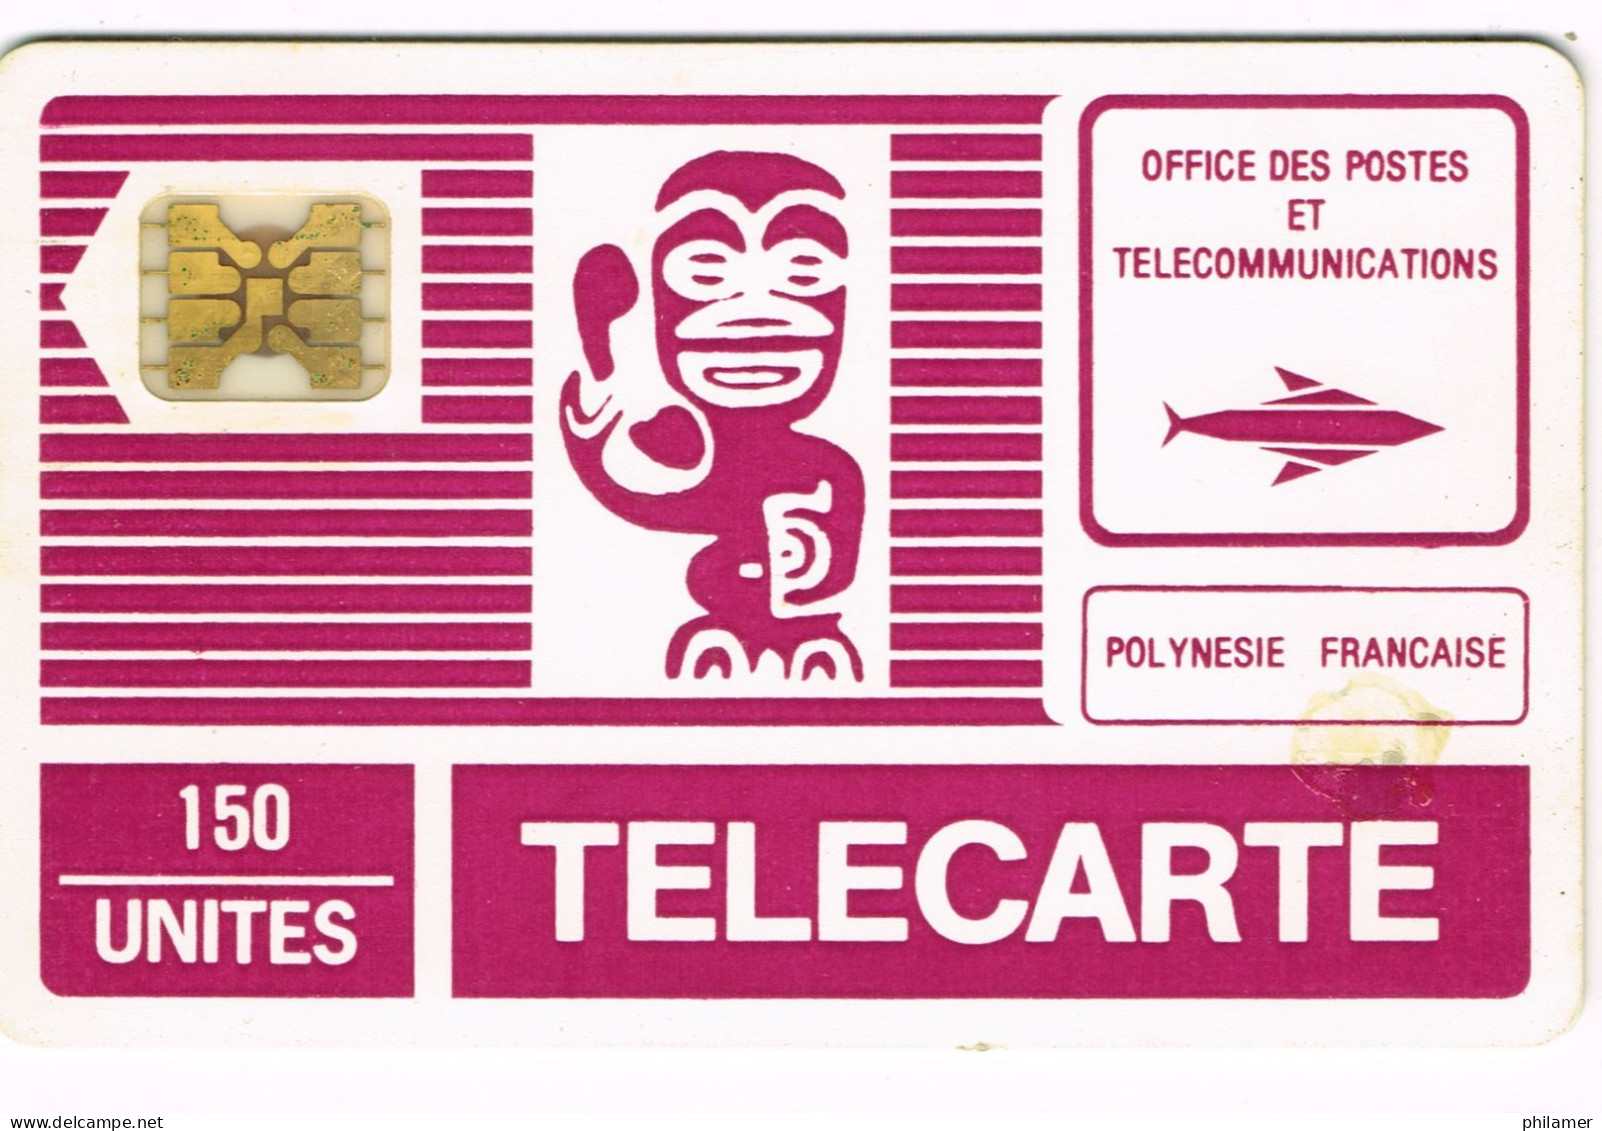 Polynesie Francaise French Polynesia Phonecard Telecarte PF2c Tiki Generique Telephone SC4 Or UT BE - New Caledonia